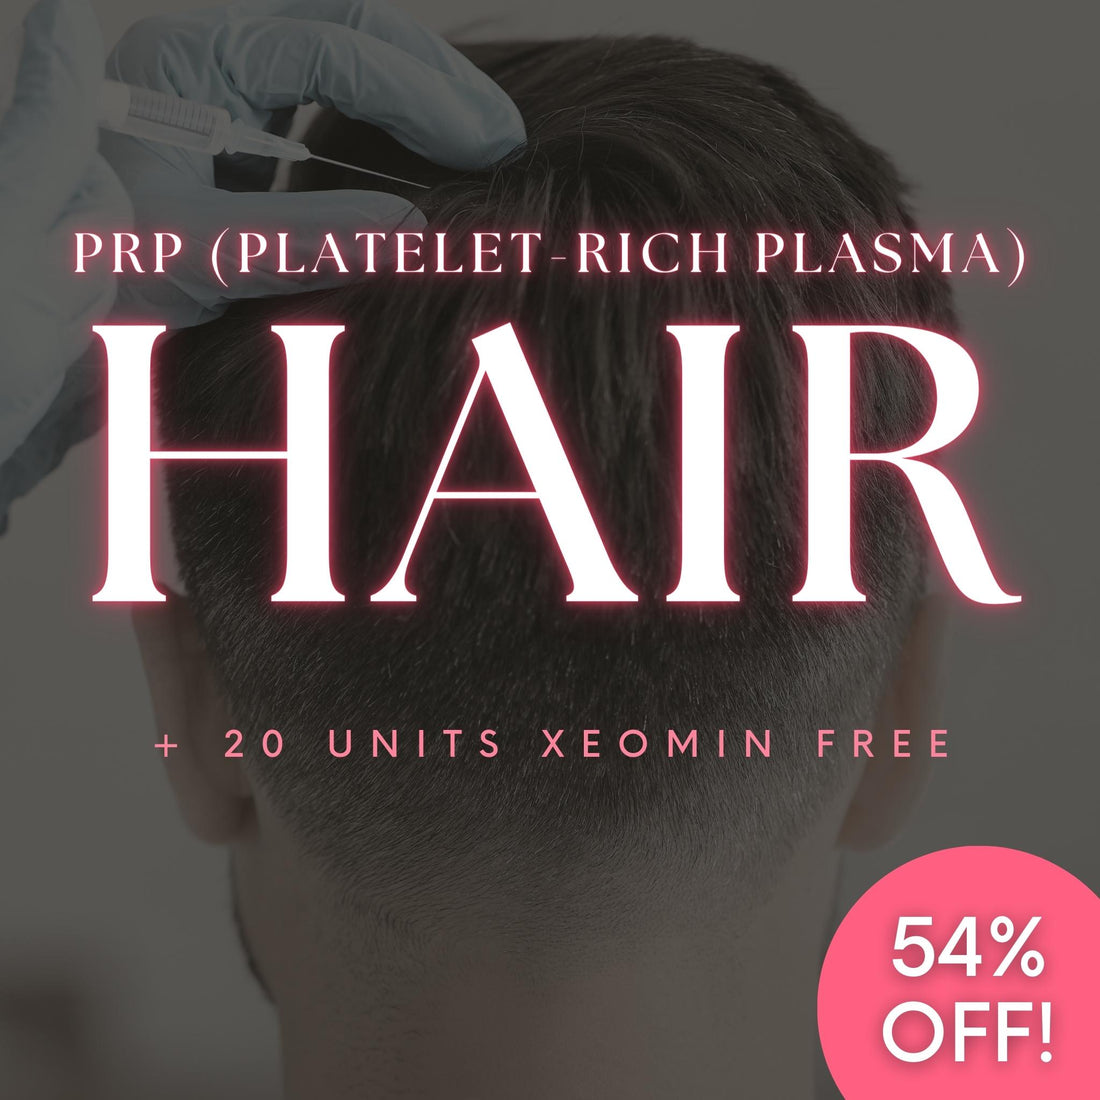 PRP (Platelet-Rich Plasma) Hair + 20 Units Xeomin FREE